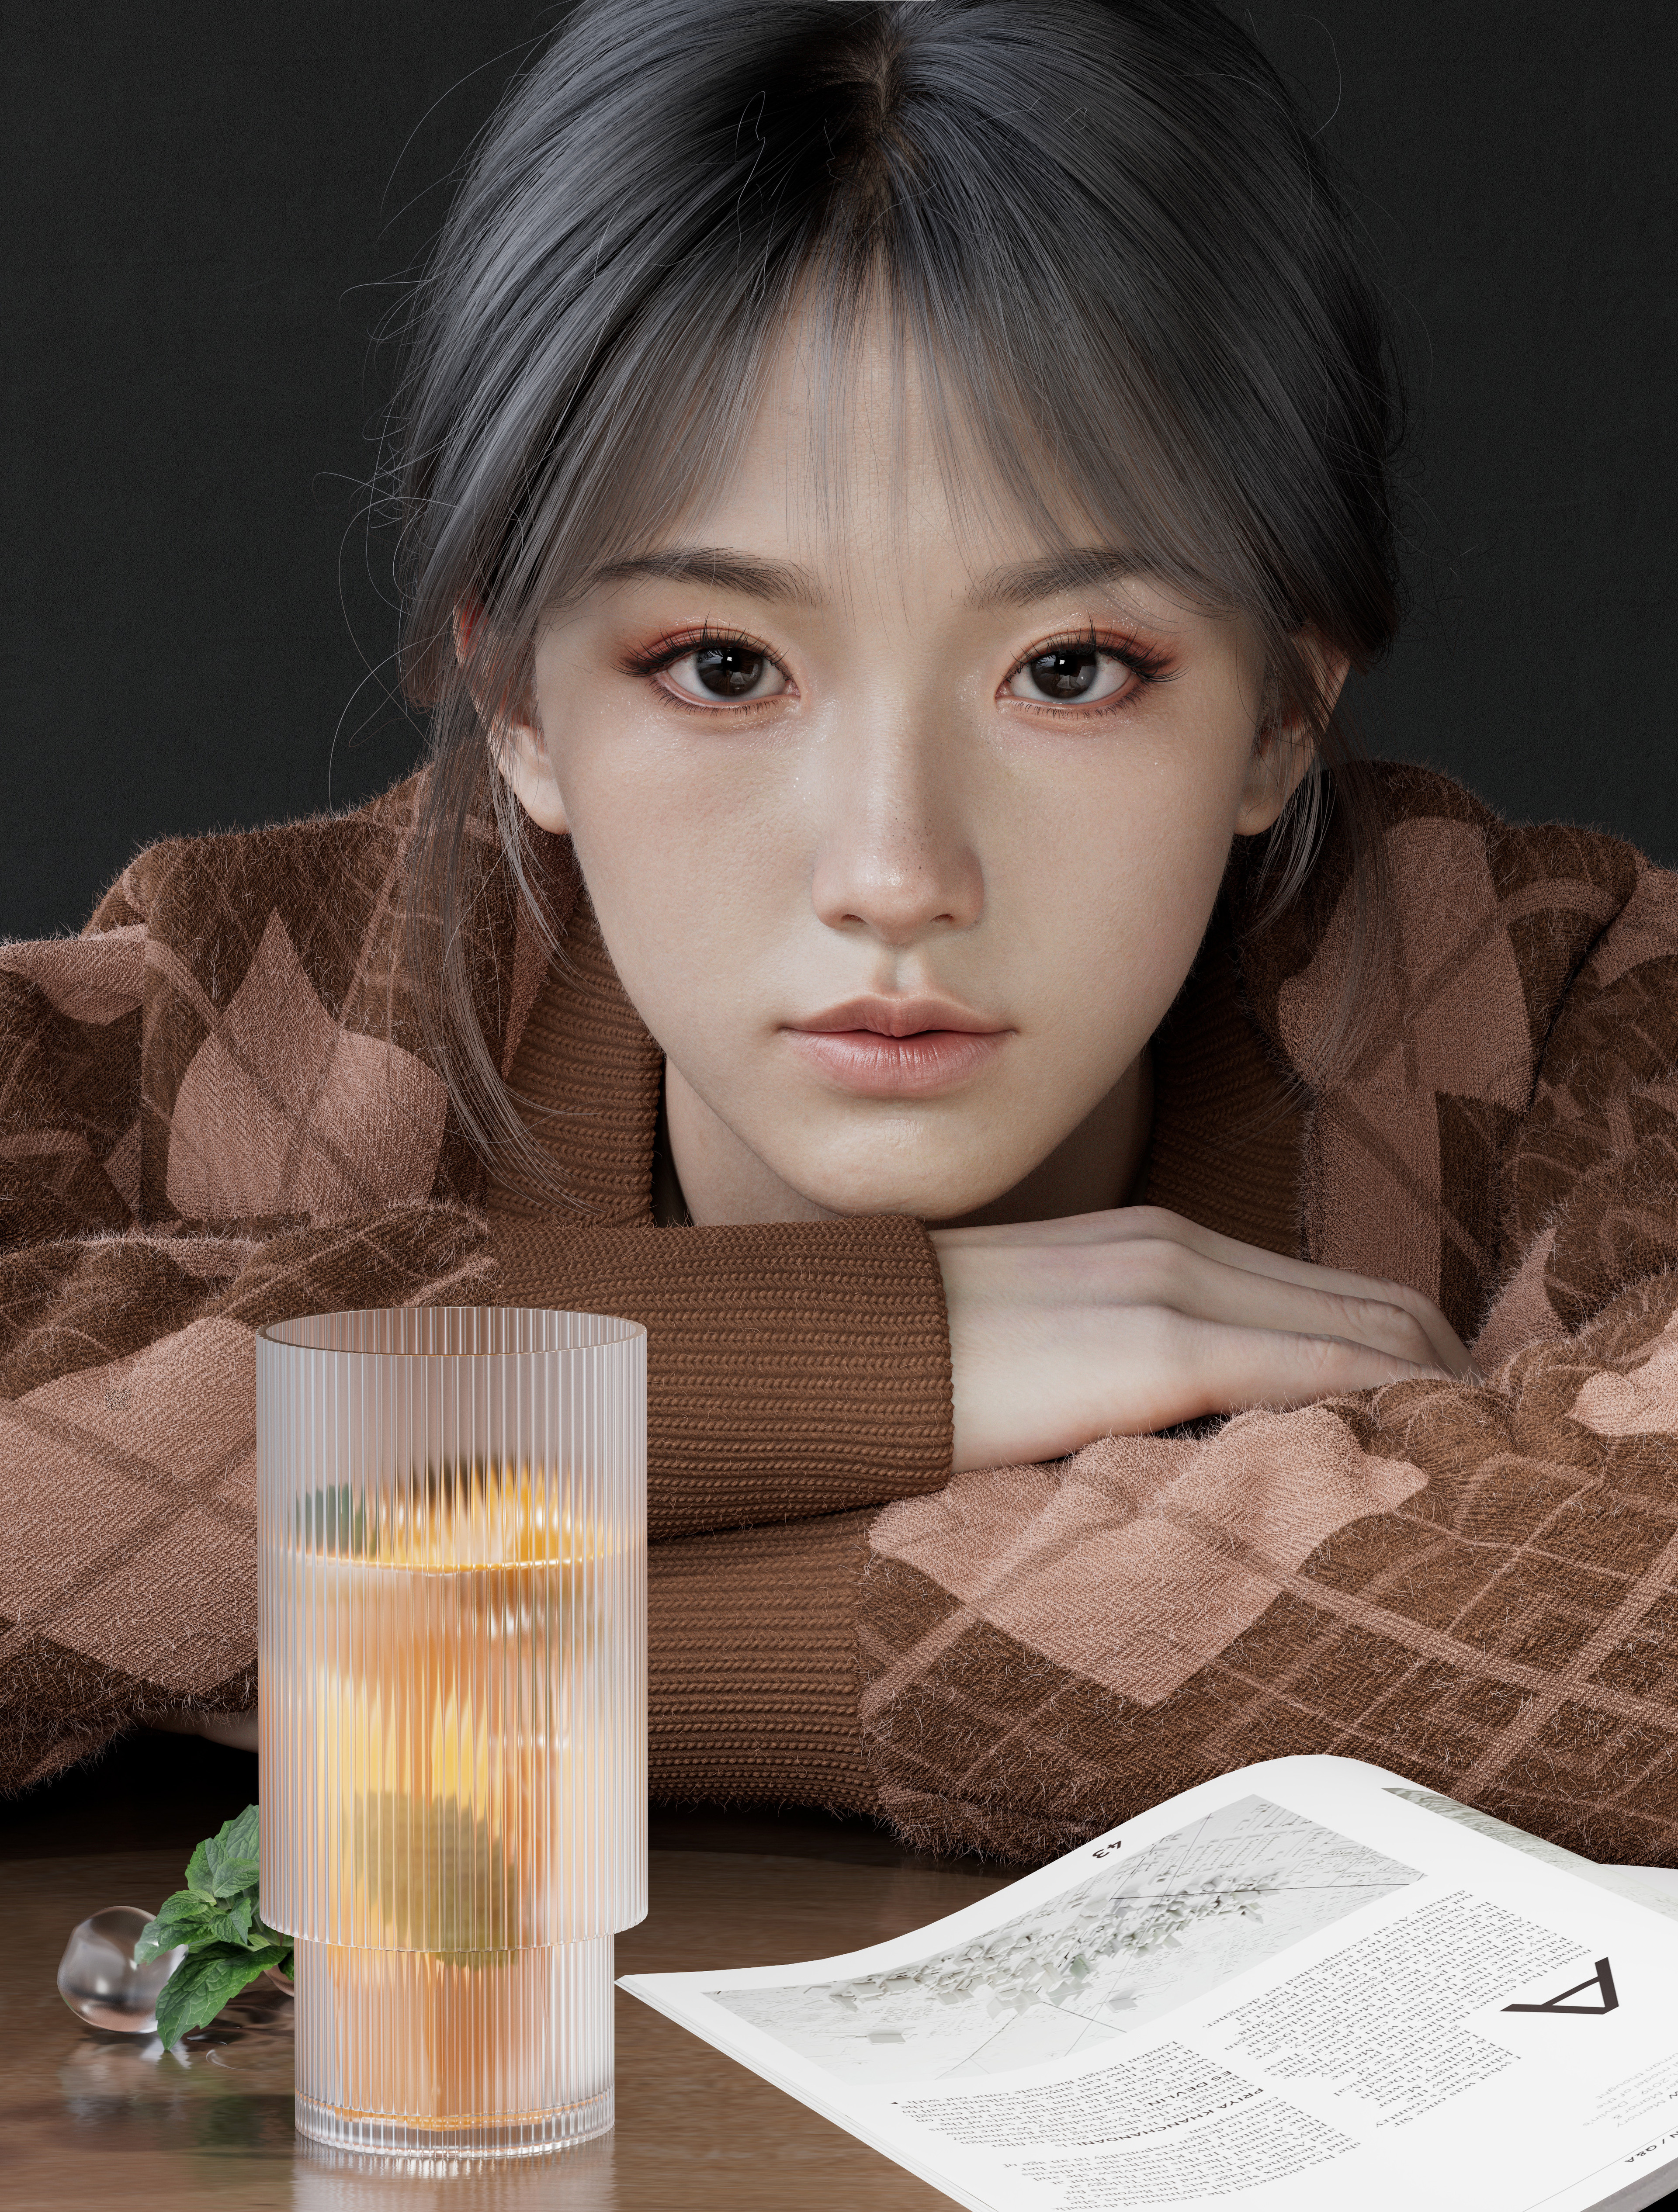 Xiao DezHu Women CGi Asian Looking At Viewer Glass Books Plants Mint Portrait 3840x5063